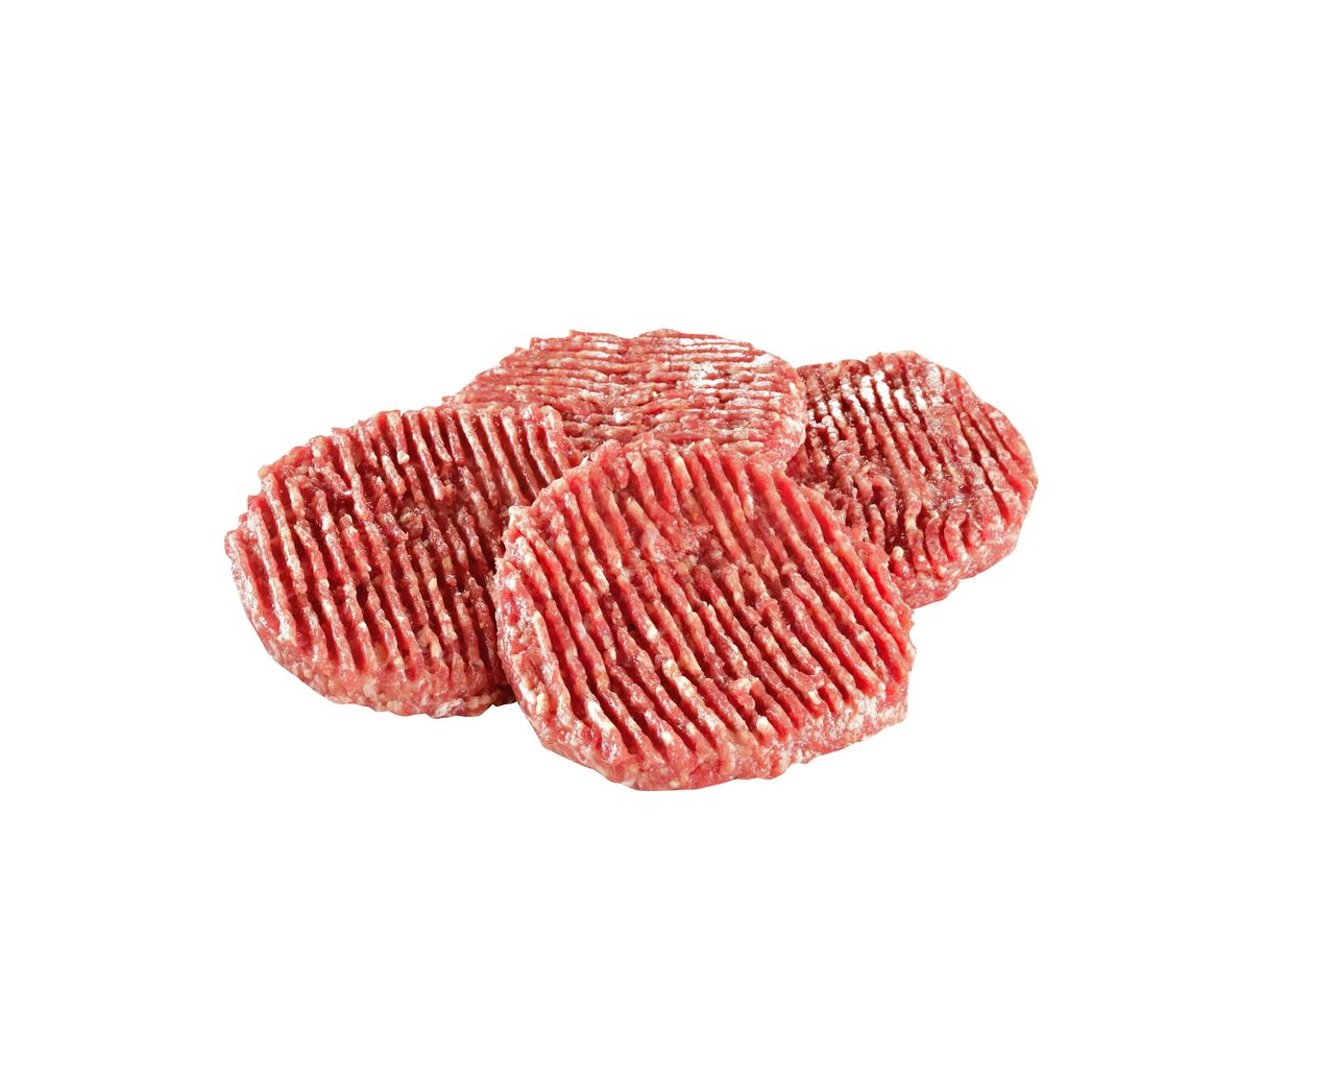 METRO Premium - Porco Iberico Burger tiefgefroren, roh, 6 Stück à 200 g, vak.-verpackt 6 x 1,2 kg Packungen